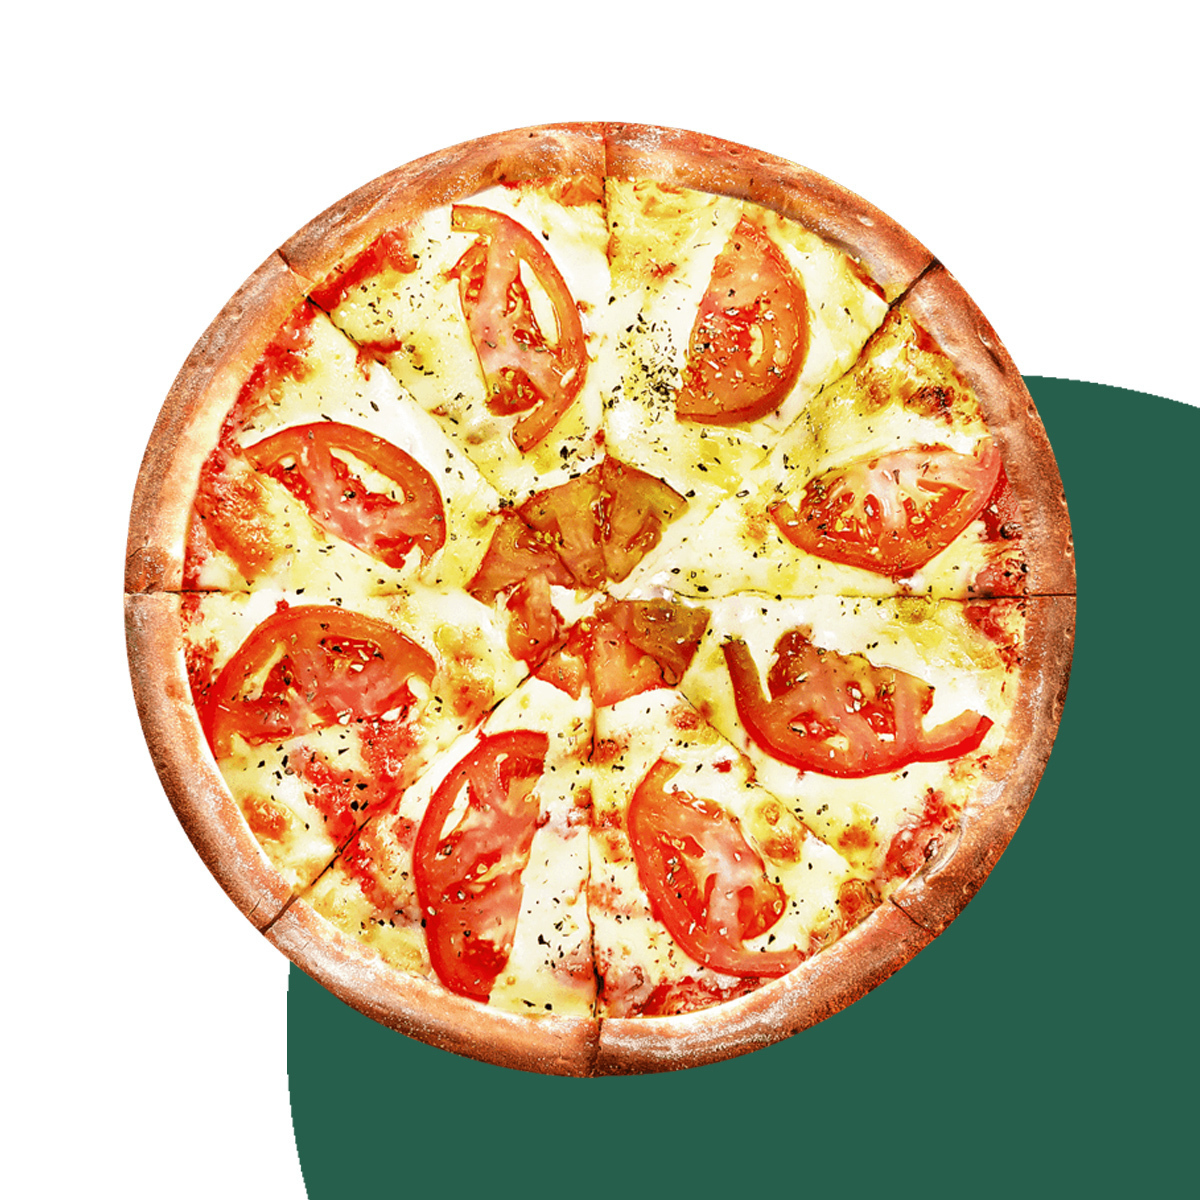 состав пиццы маргарита и пепперони фото 44